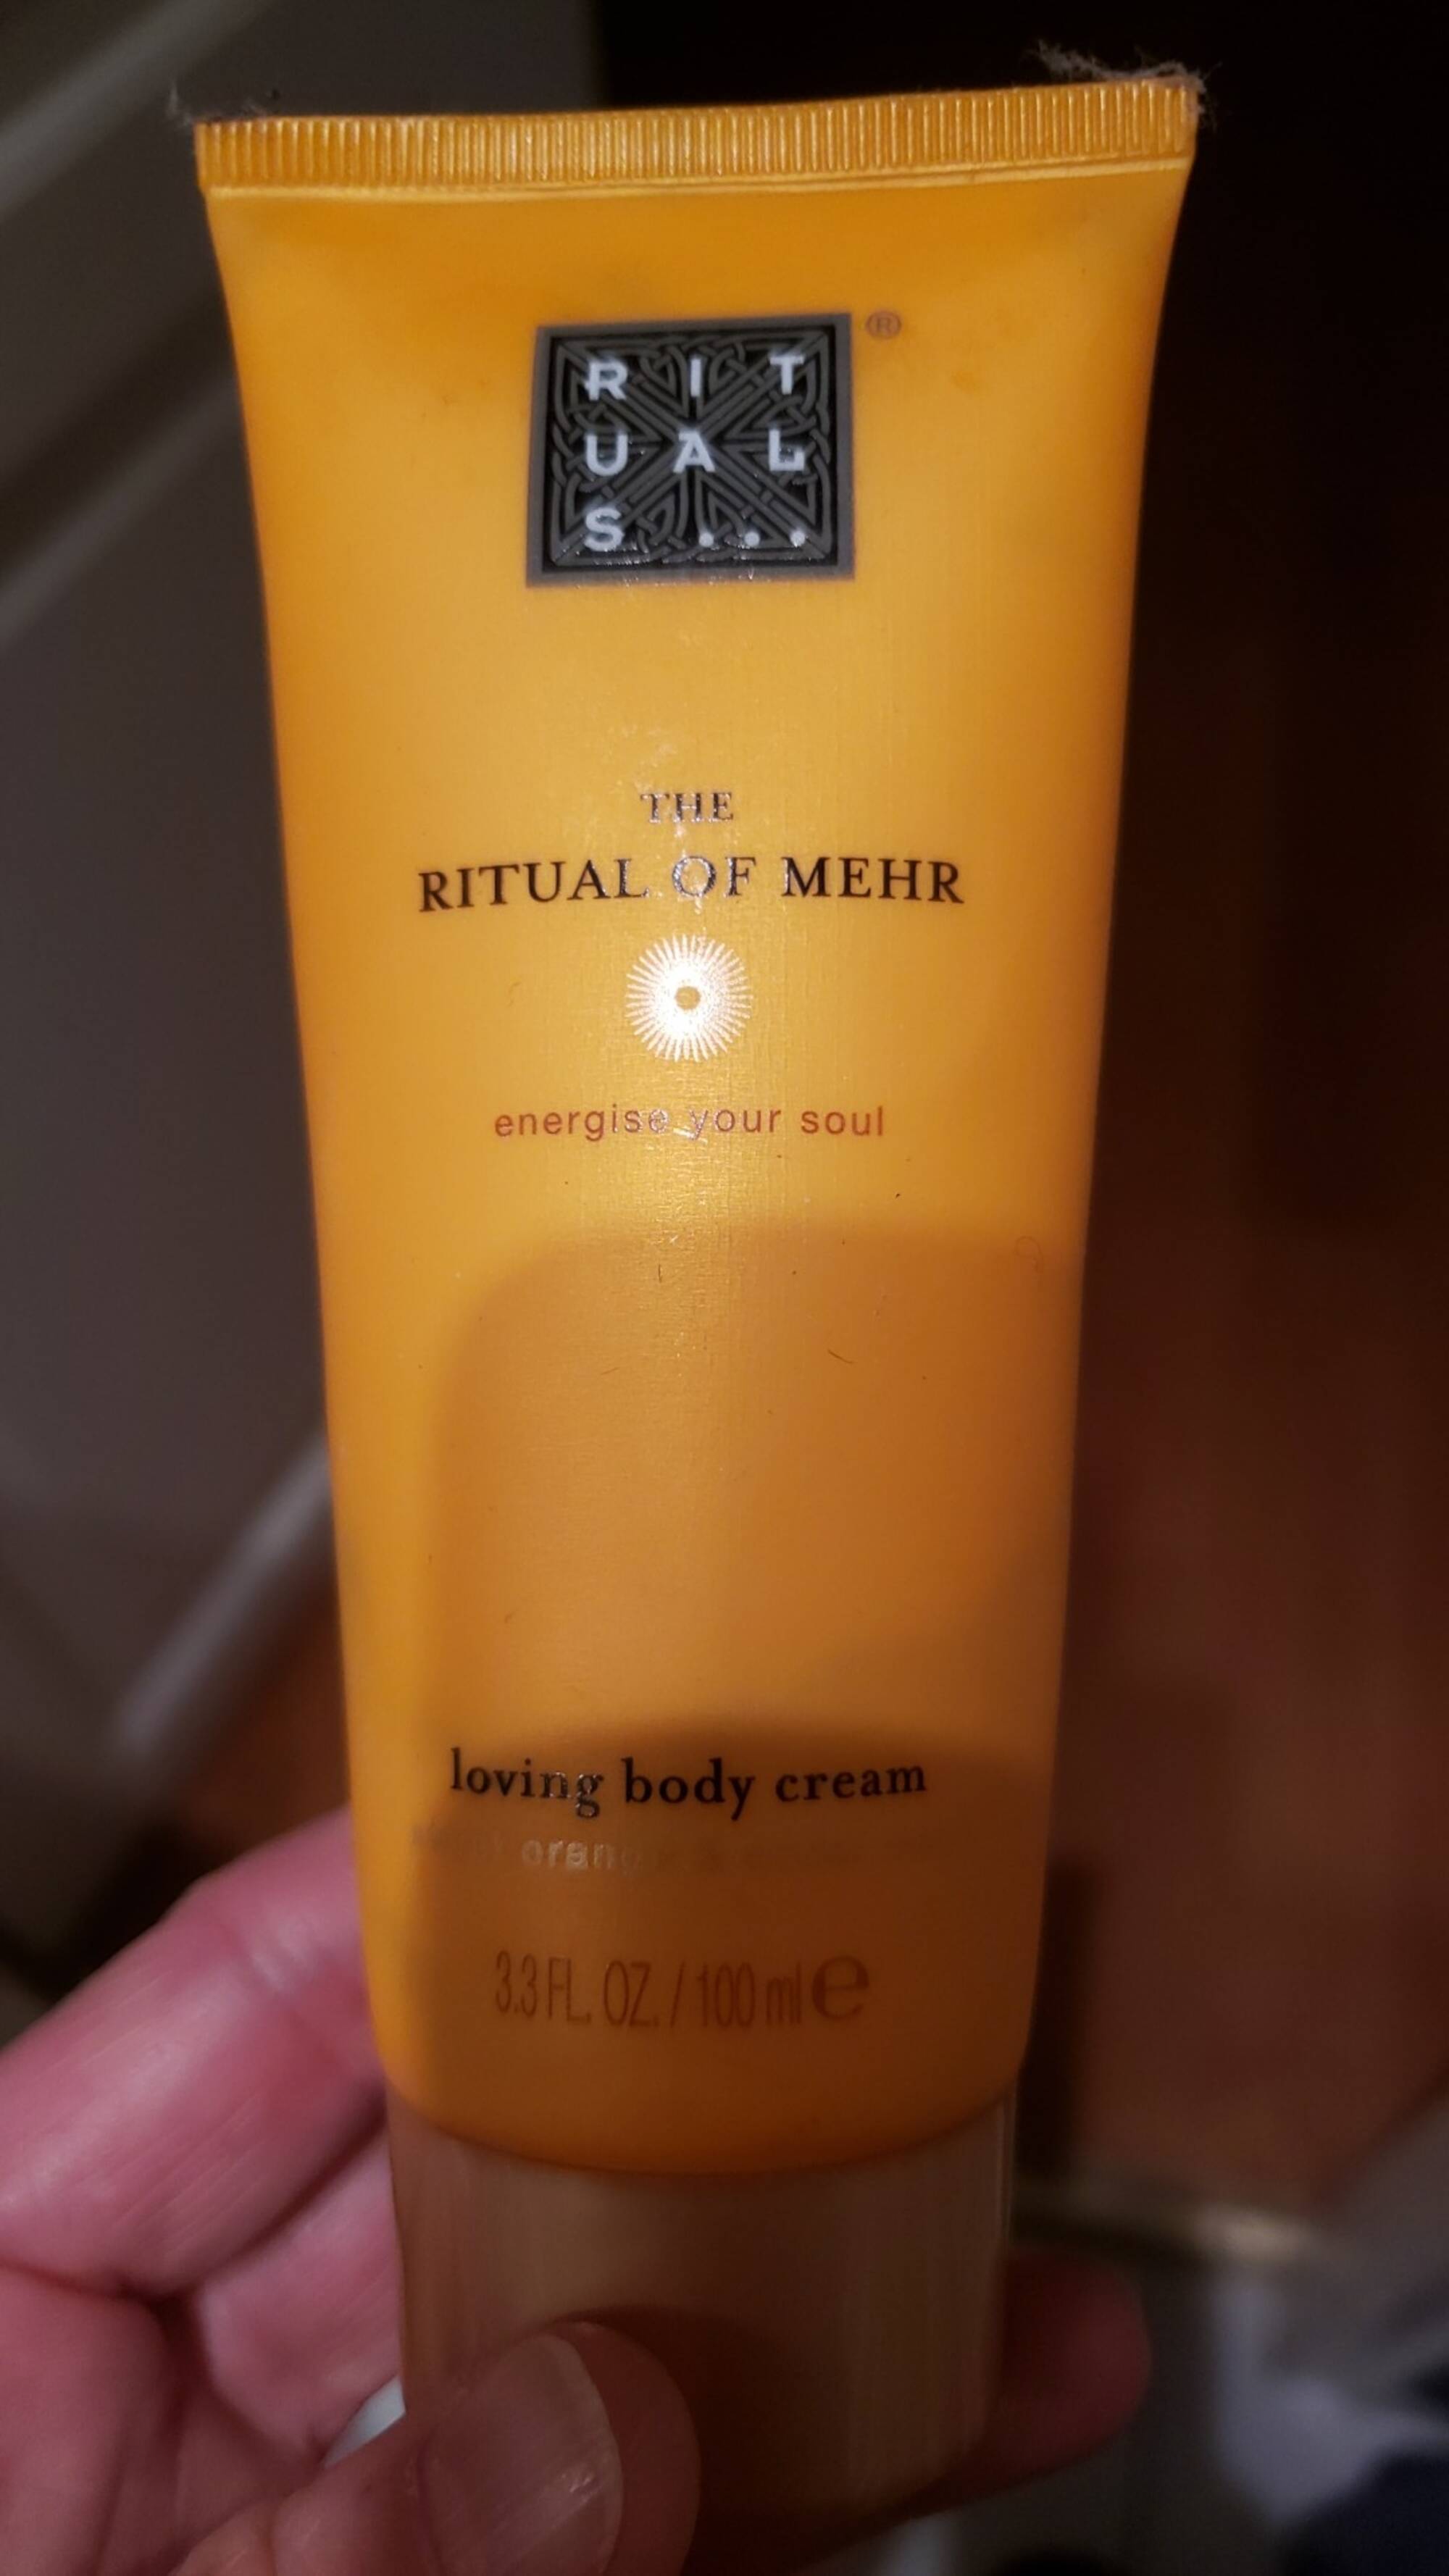 RITUALS - The ritual of Mehr - Loving body cream